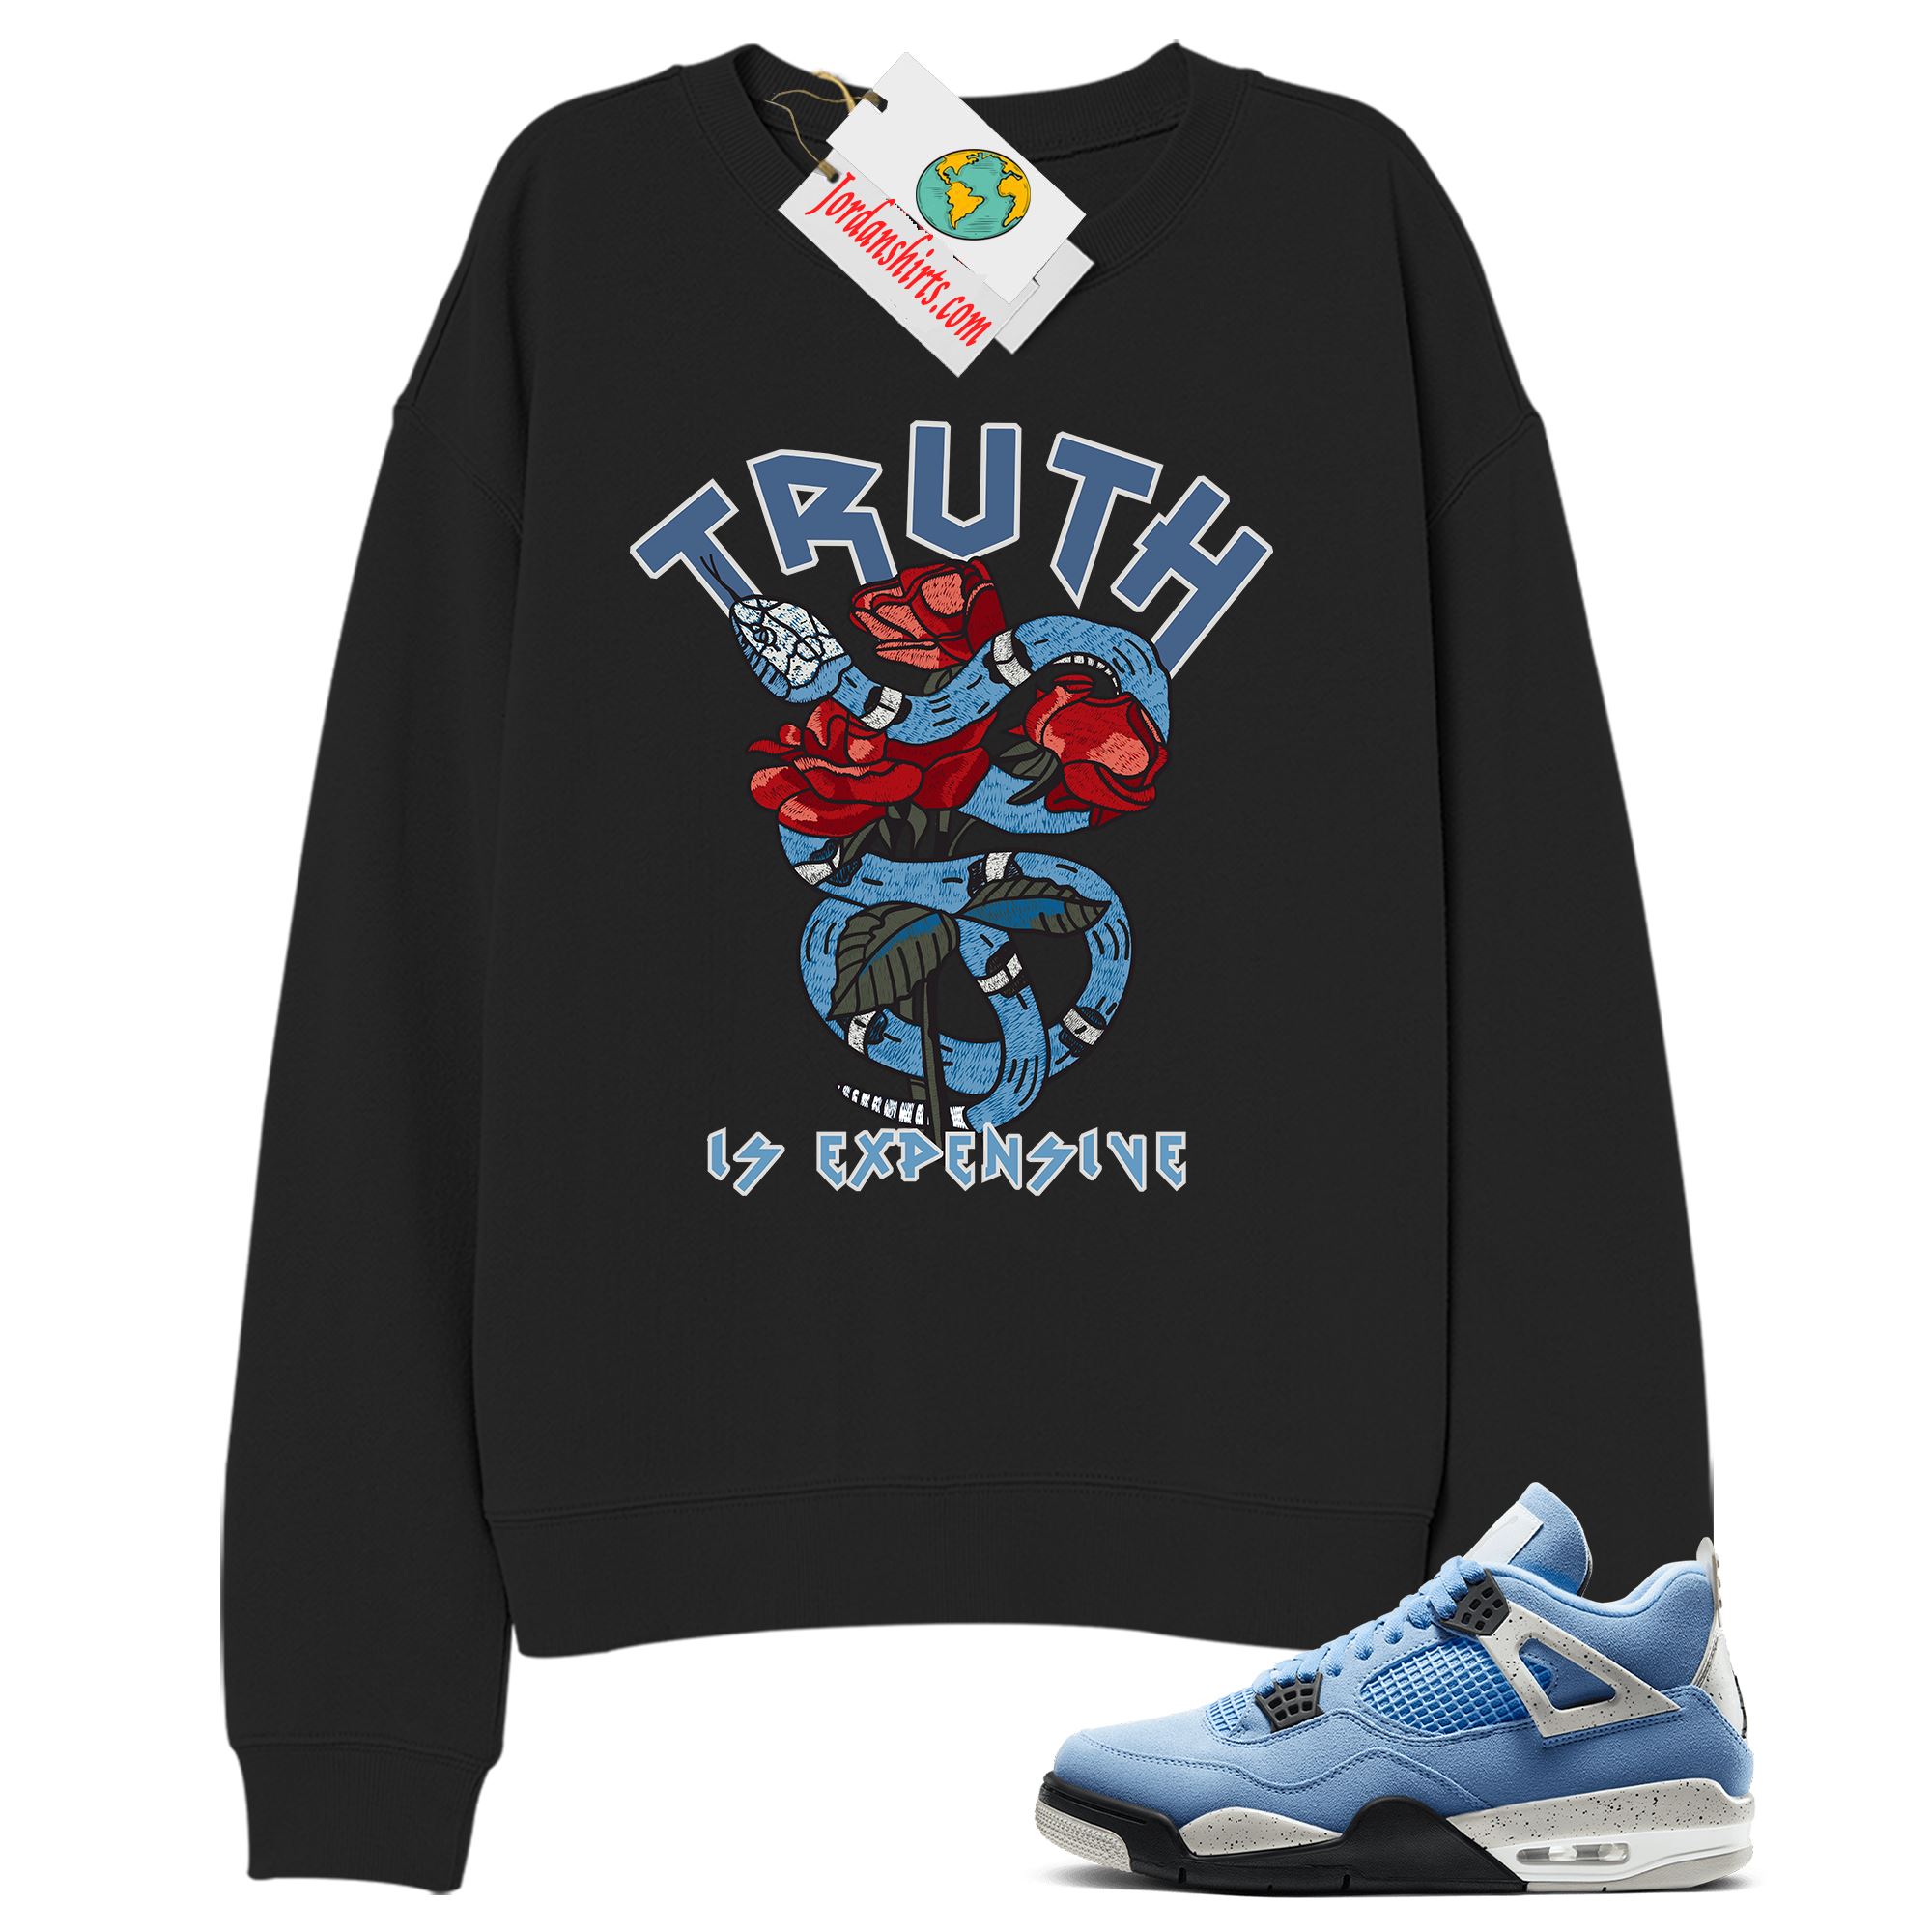 Jordan 4 Sweatshirt, Truth Is Expensive Snake Black Sweatshirt Air Jordan 4 University Blue 4s Plus Size Up To 5xl